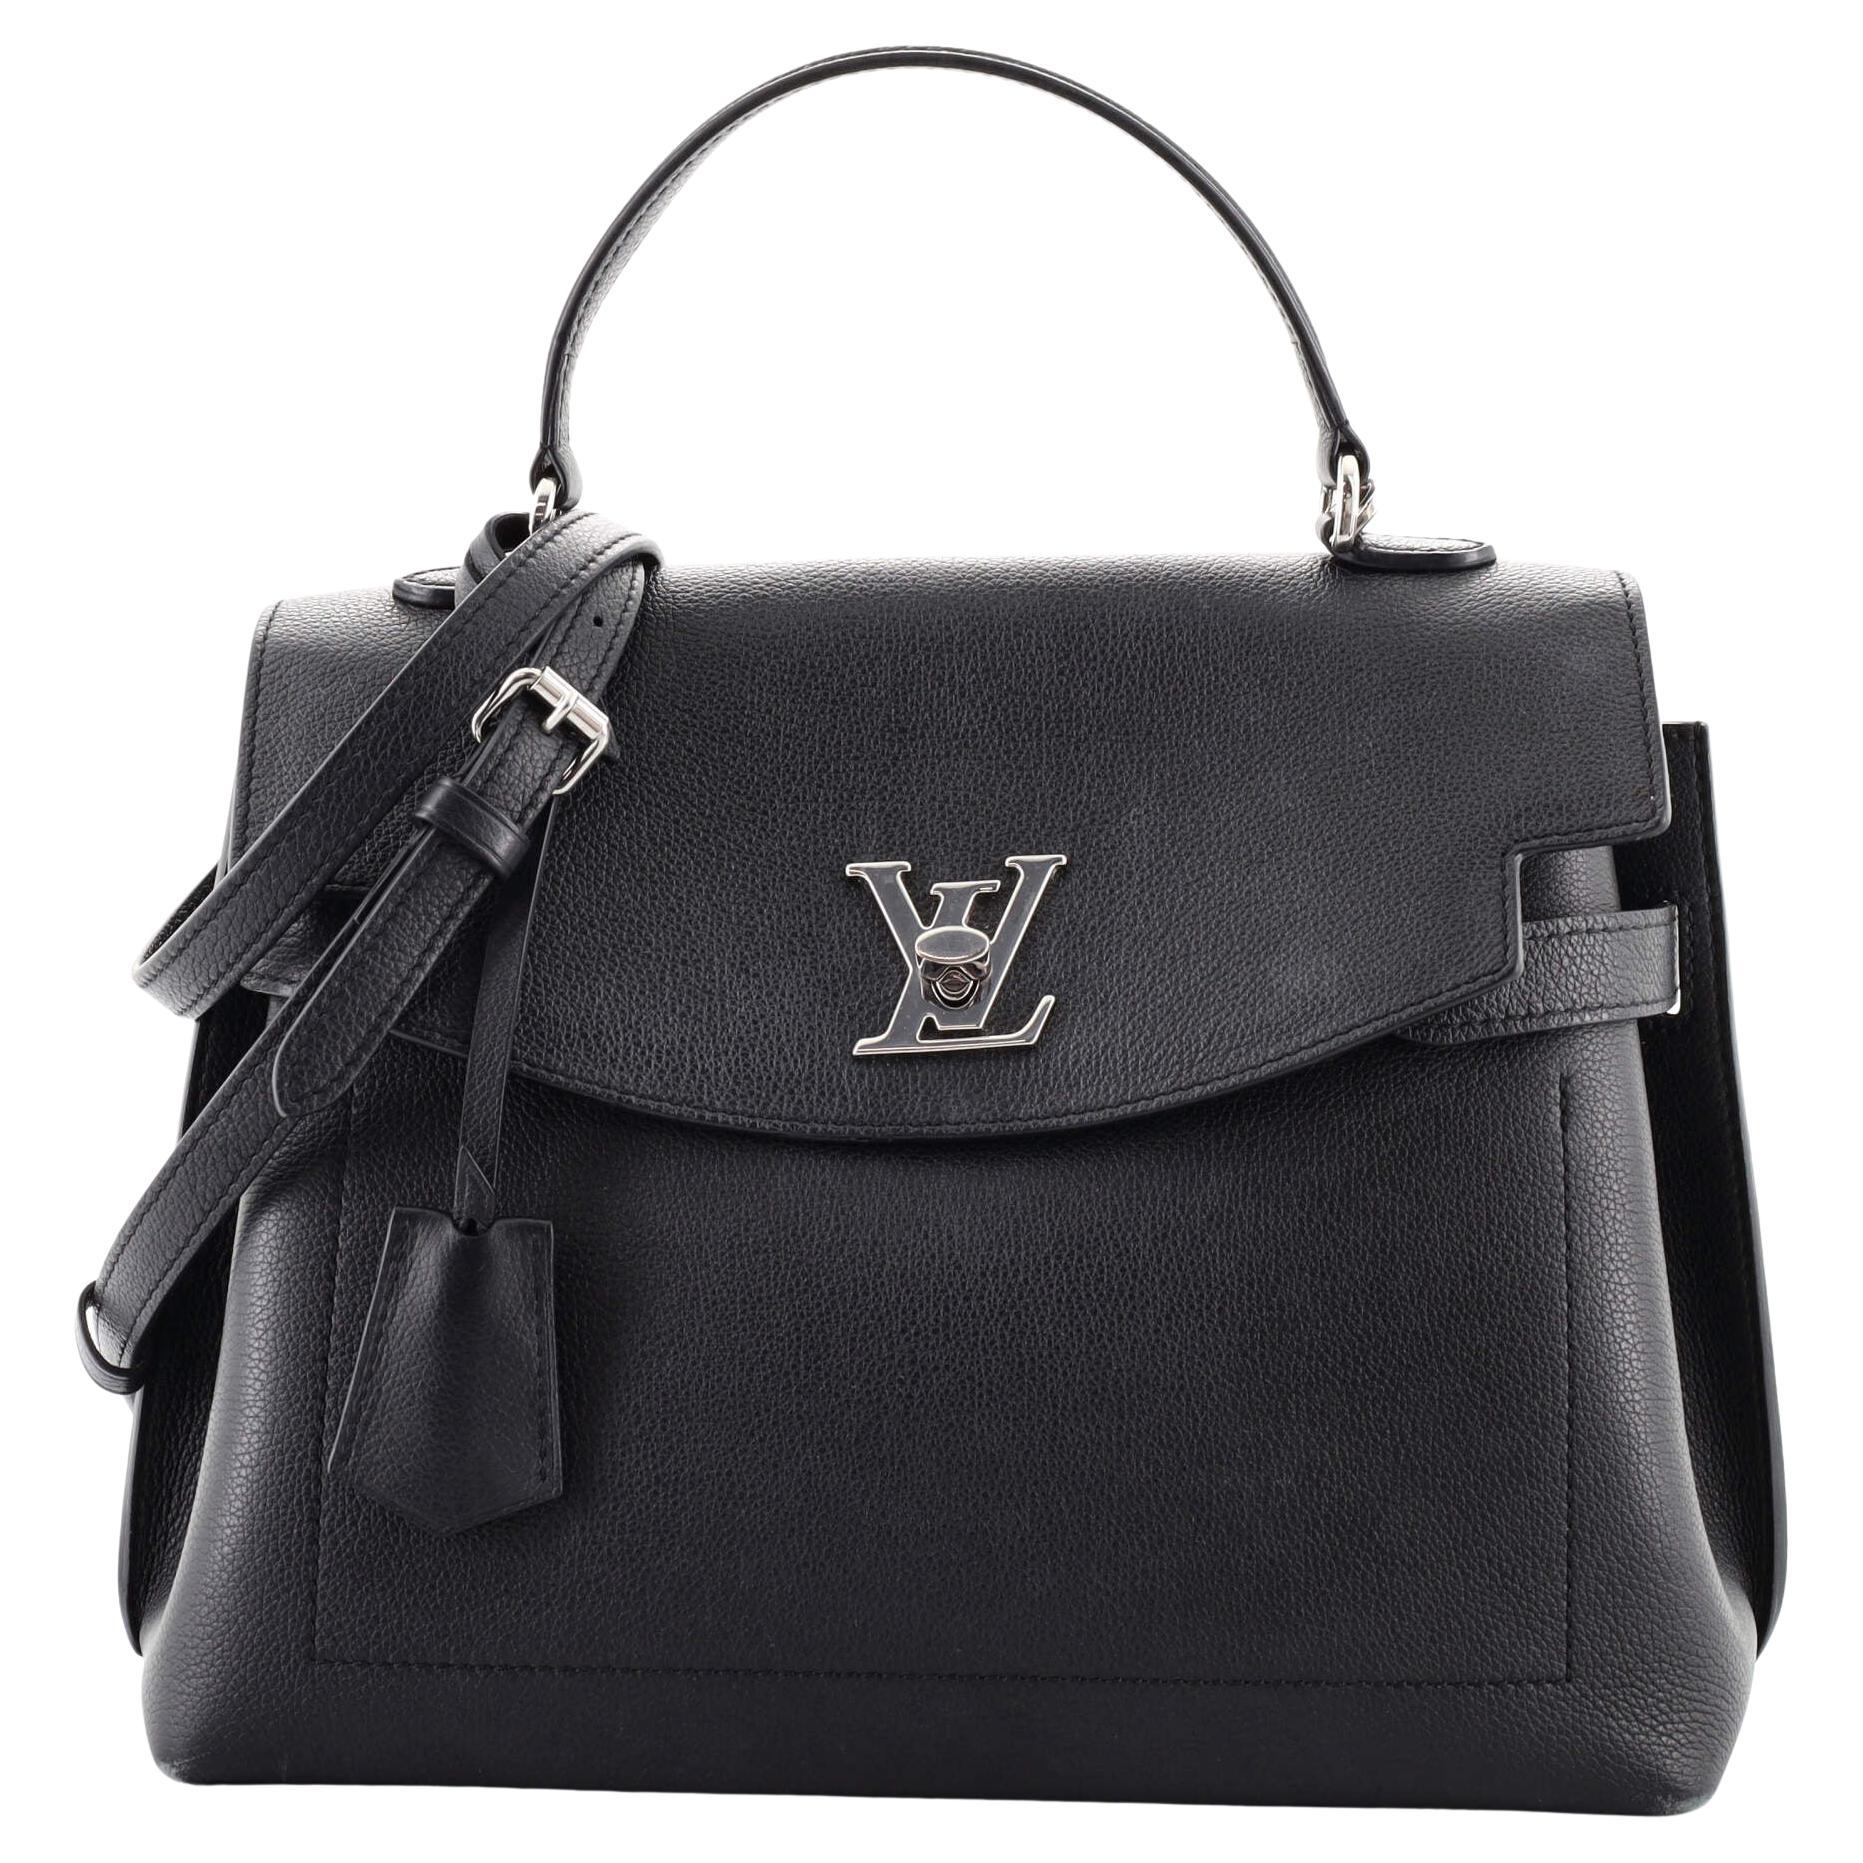 LOCKME EVER BB BAG  Louis vuitton, Women handbags, Handbags on sale